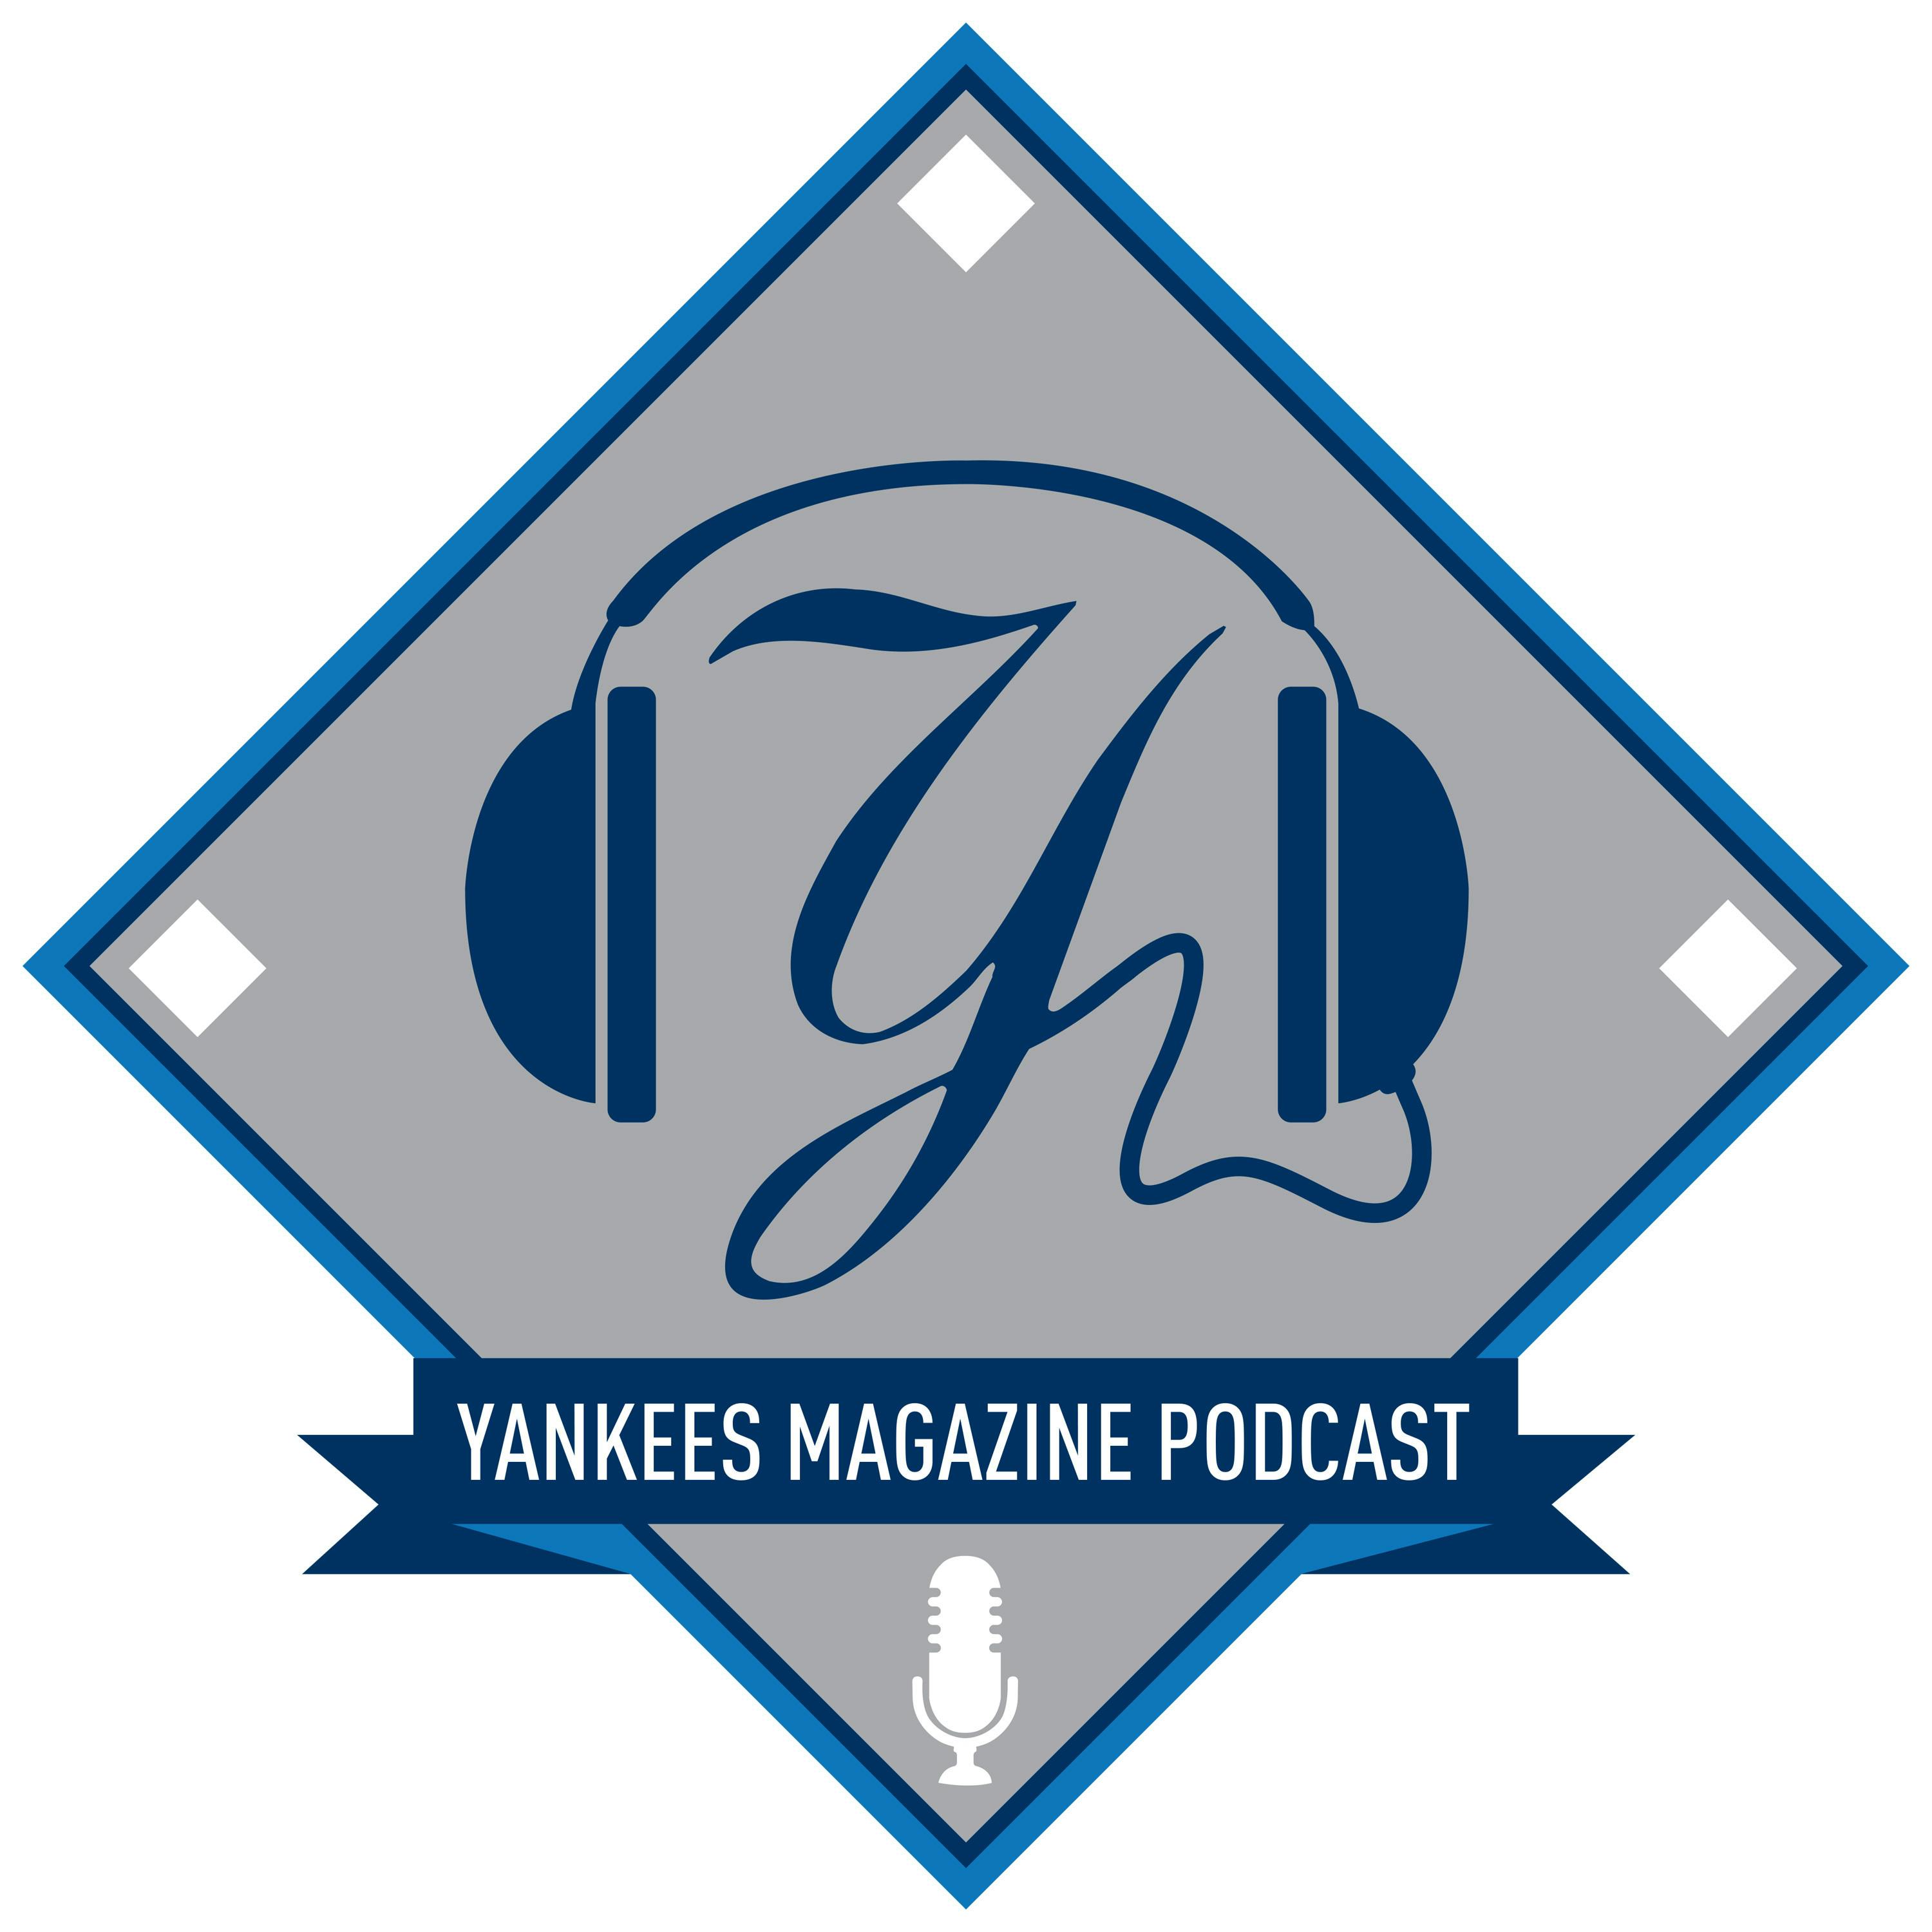 Yankees Magazine Podcast, Season 4, Episode 22. Episode Title: Zoom Lens.